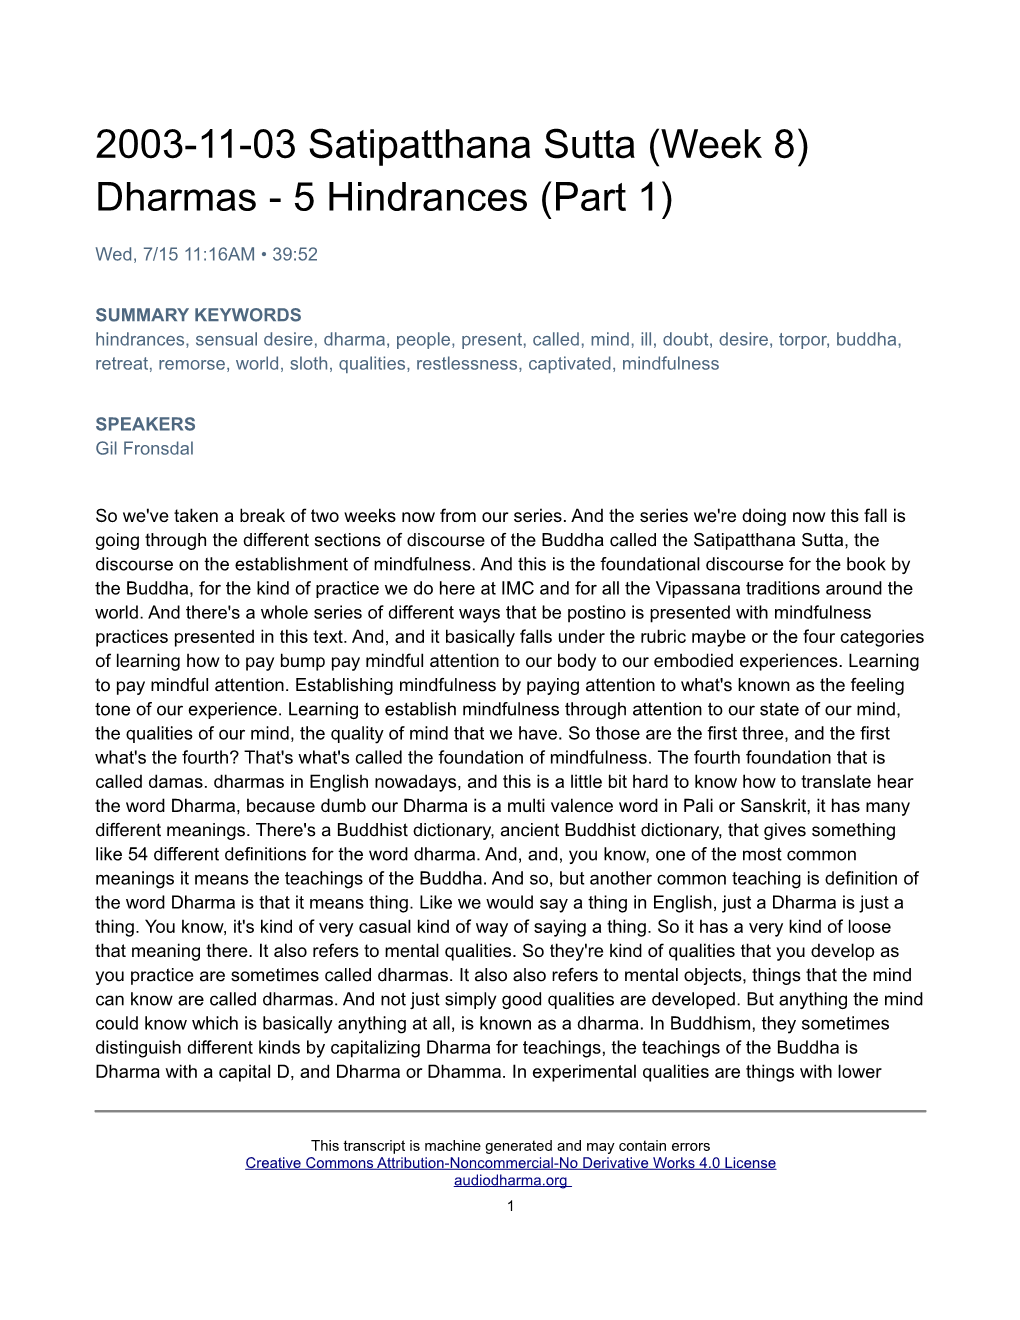 2003-11-03 Satipatthana Sutta (Week 8) Dharmas - 5 Hindrances (Part 1)